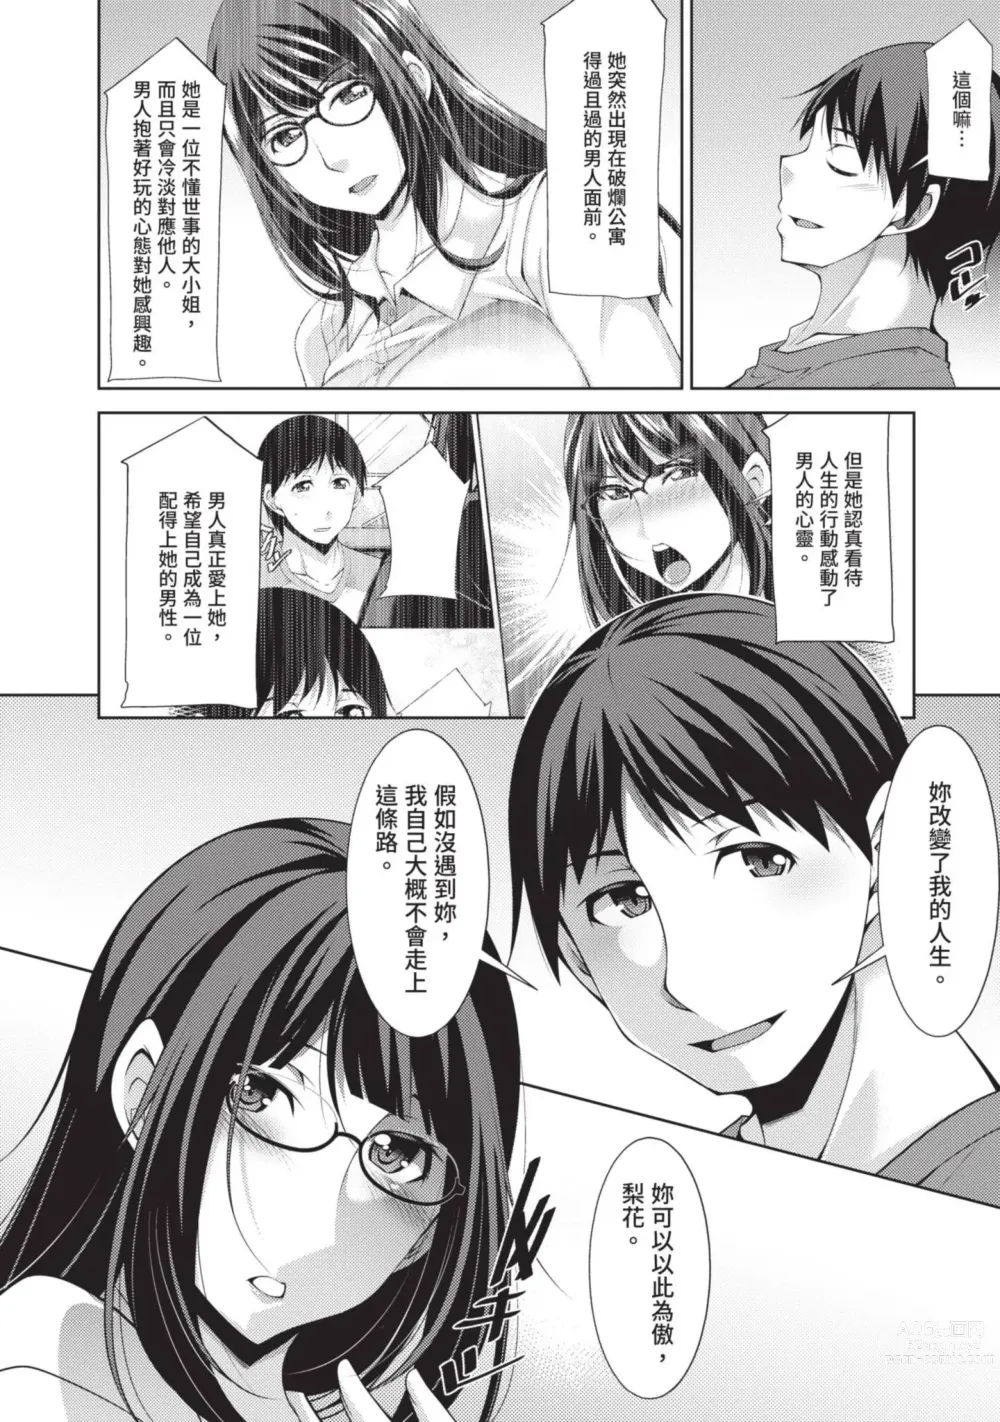 Page 156 of manga 眼鏡美女總是冷淡對應我